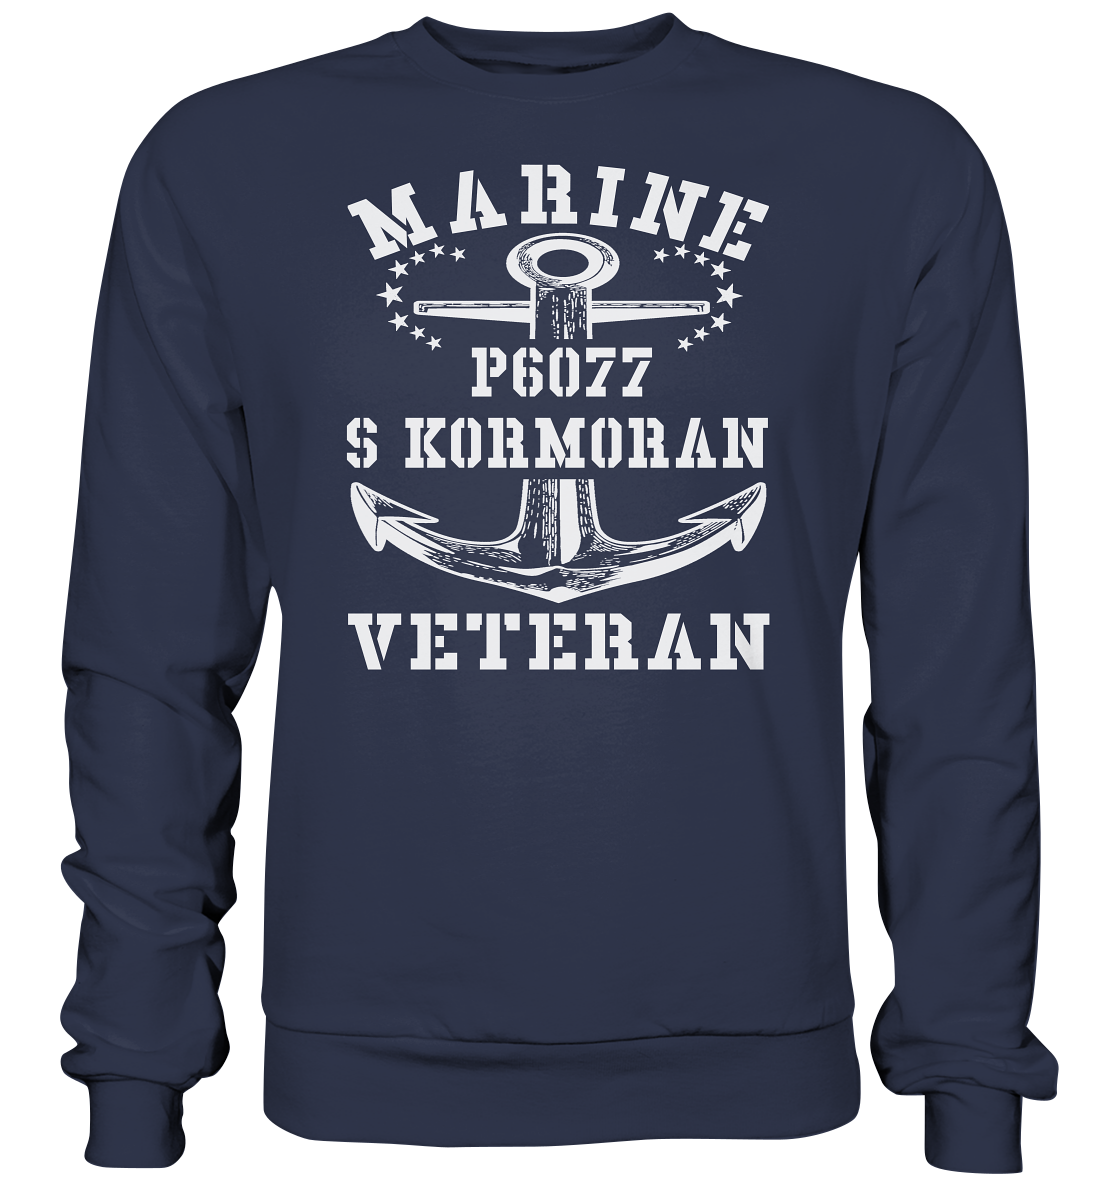 P6077 S KORMORAN Marine Veteran - Premium Sweatshirt